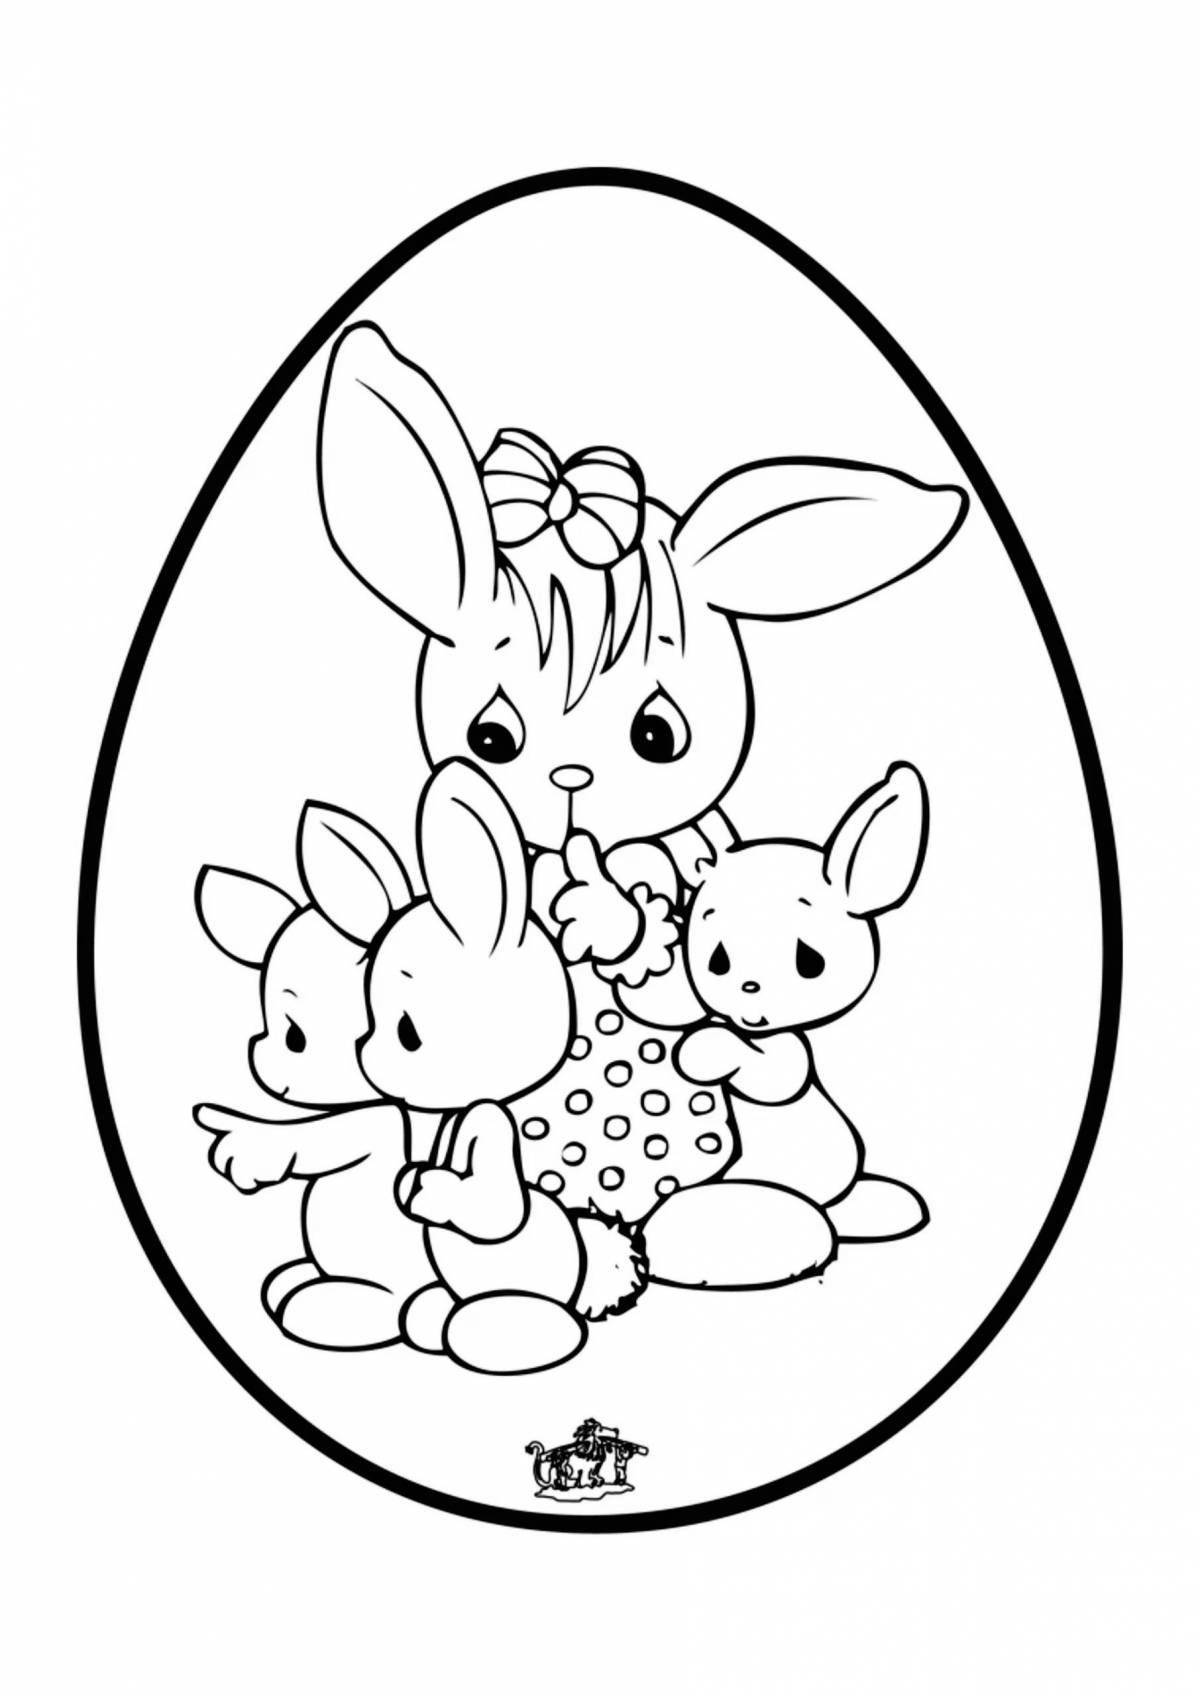 Fluffy print rabbit coloring book